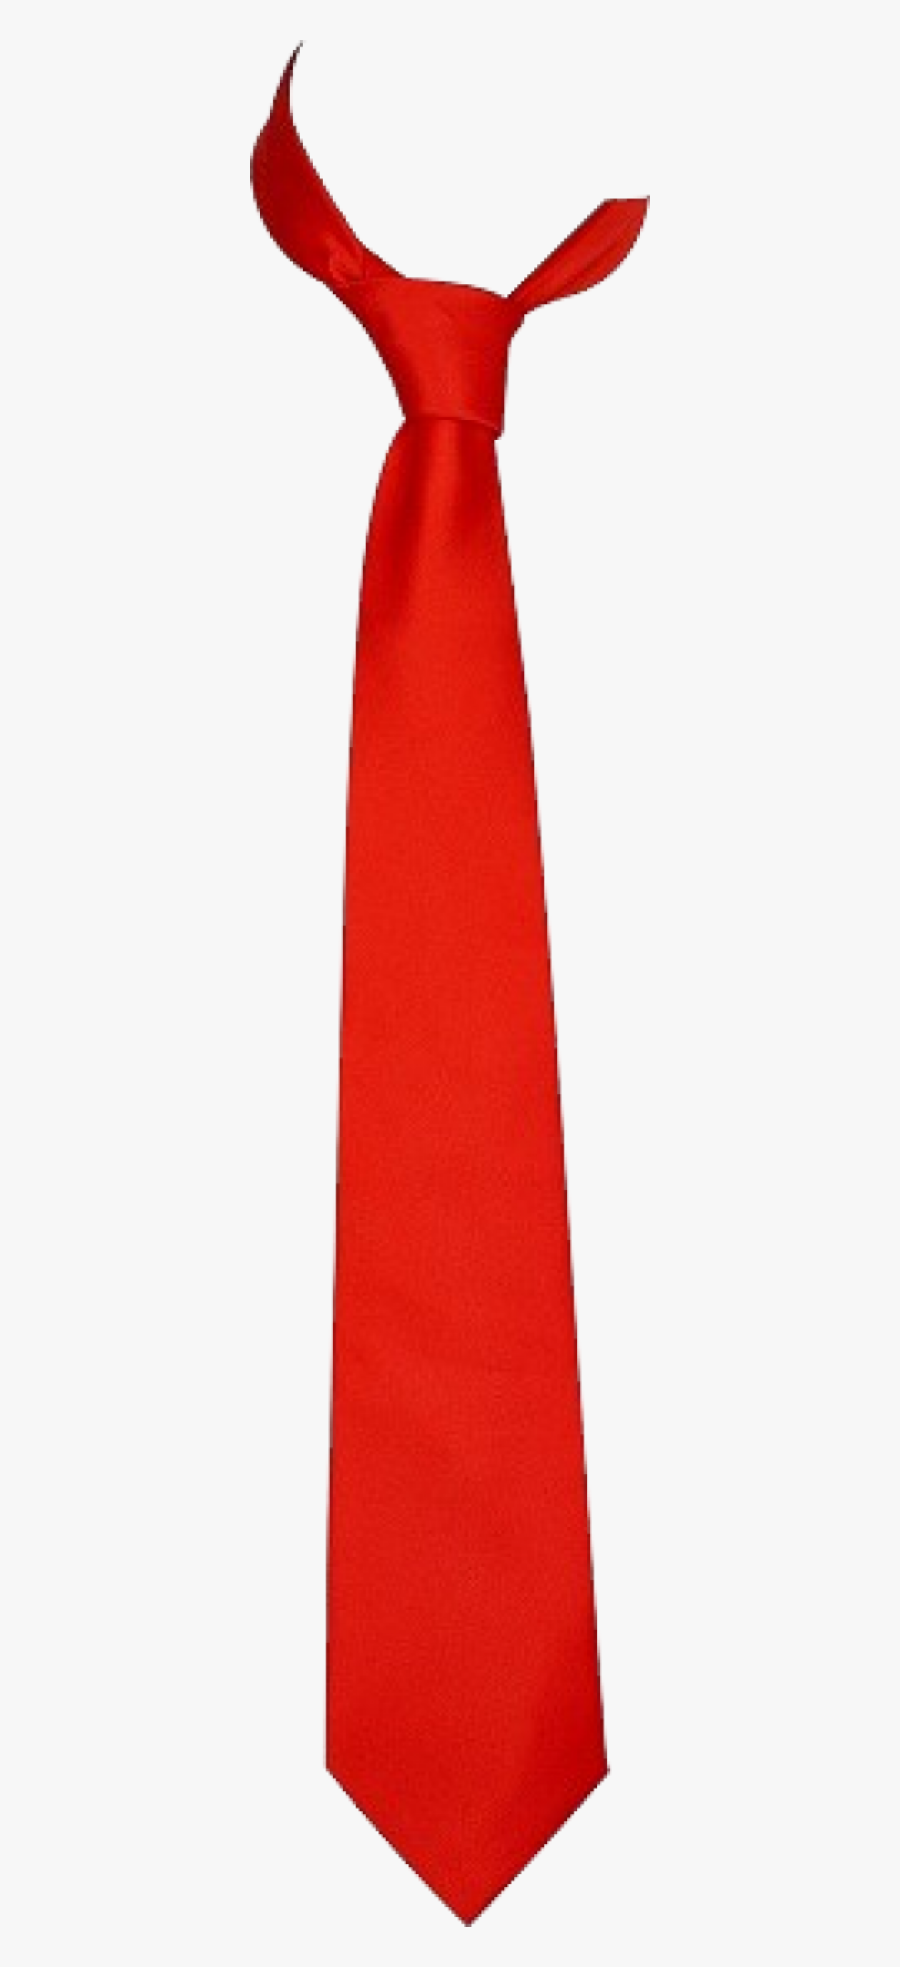 Tie Transparent Png Pictures - Red Tie Png, Transparent Clipart